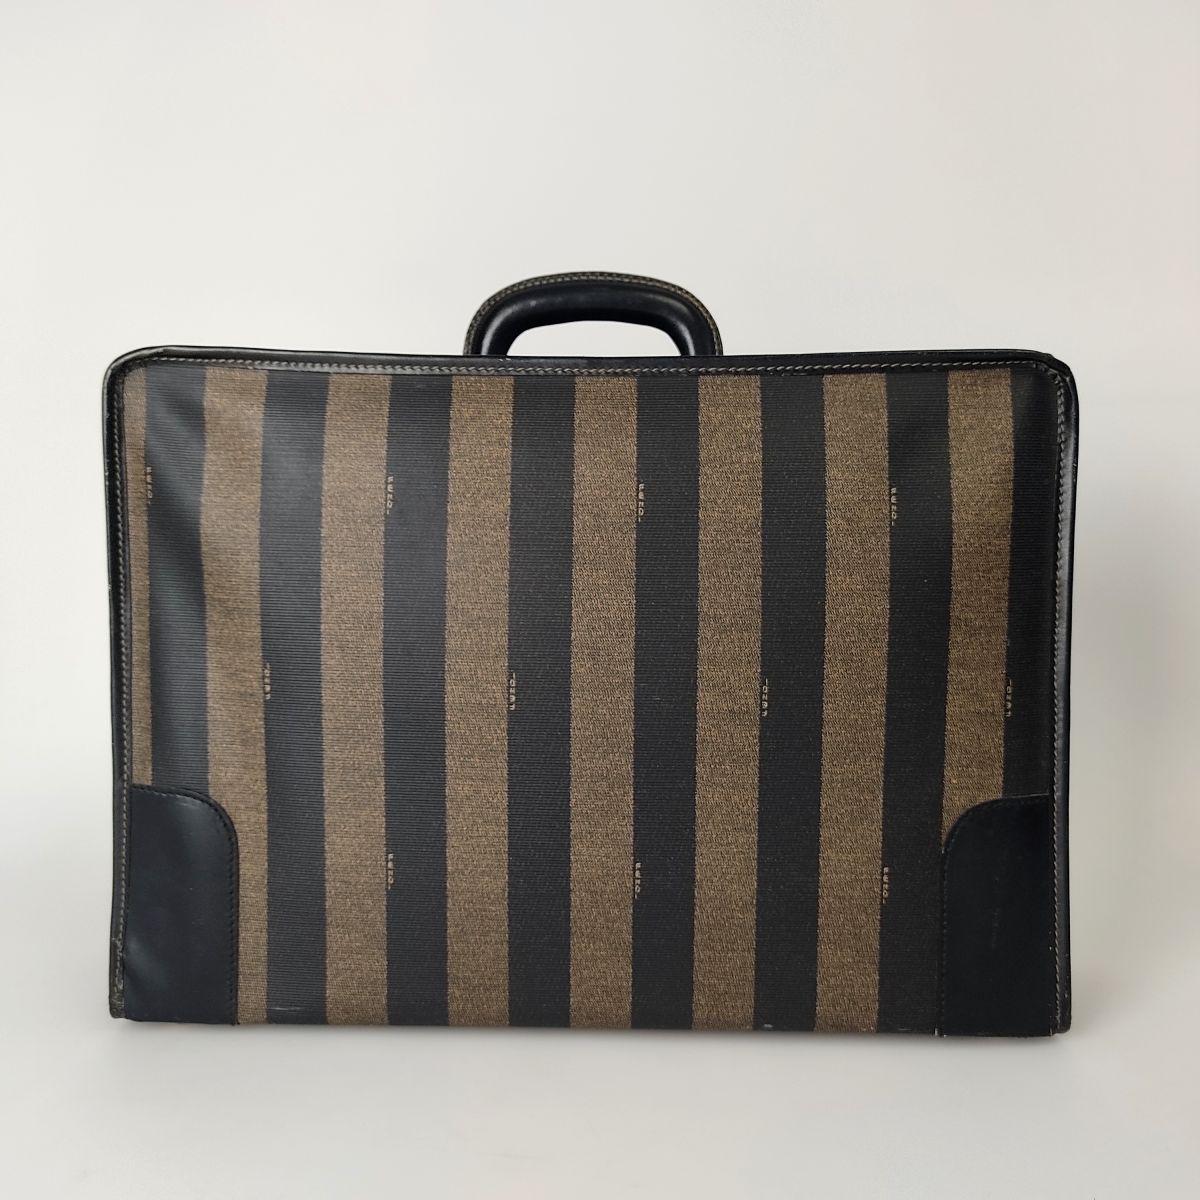 Fendi Fendi rare vintage Pacan work bag - '10s